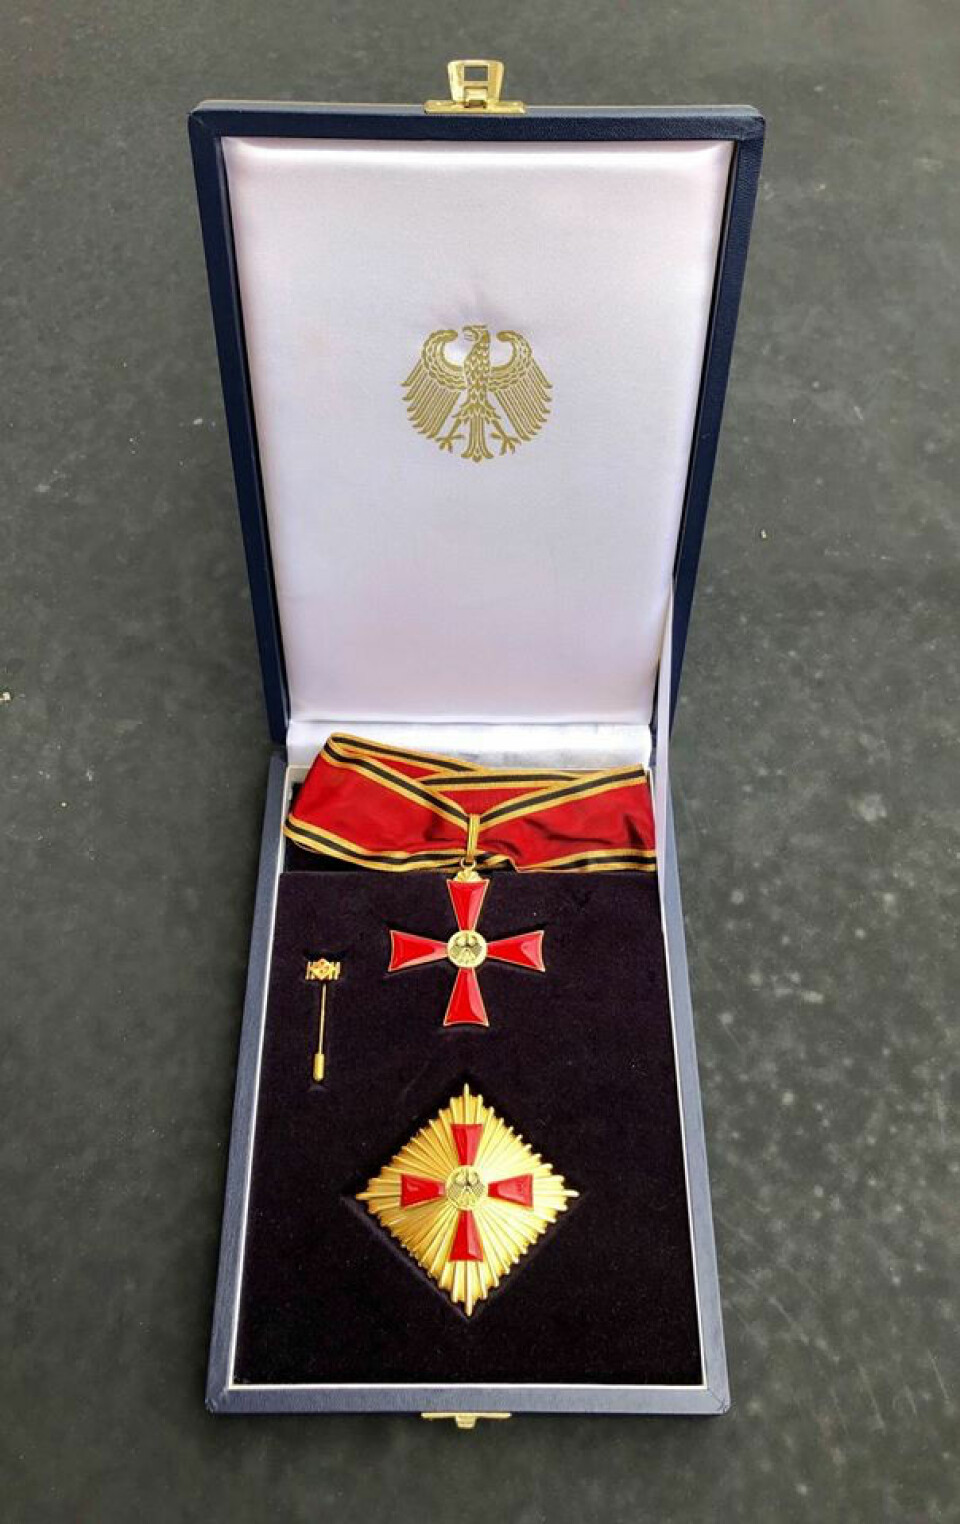 Slik ser den ut, «Großes Verdienstkreuz mit Stern». Foto: Tyskland ambassade.